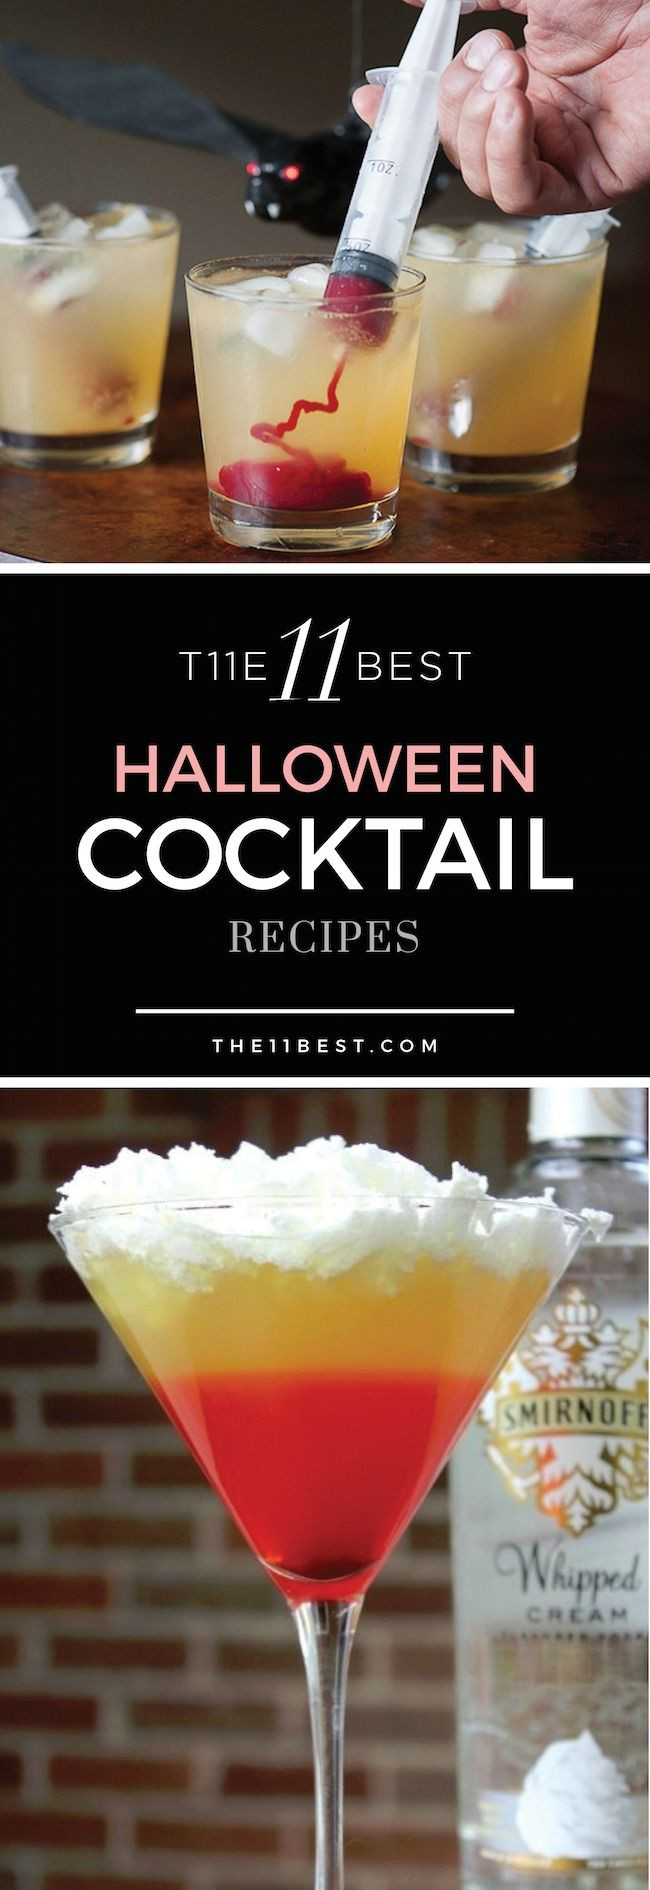 Halloween Alcoholic Drinks Recipes
 Best 25 Halloween cocktails ideas on Pinterest